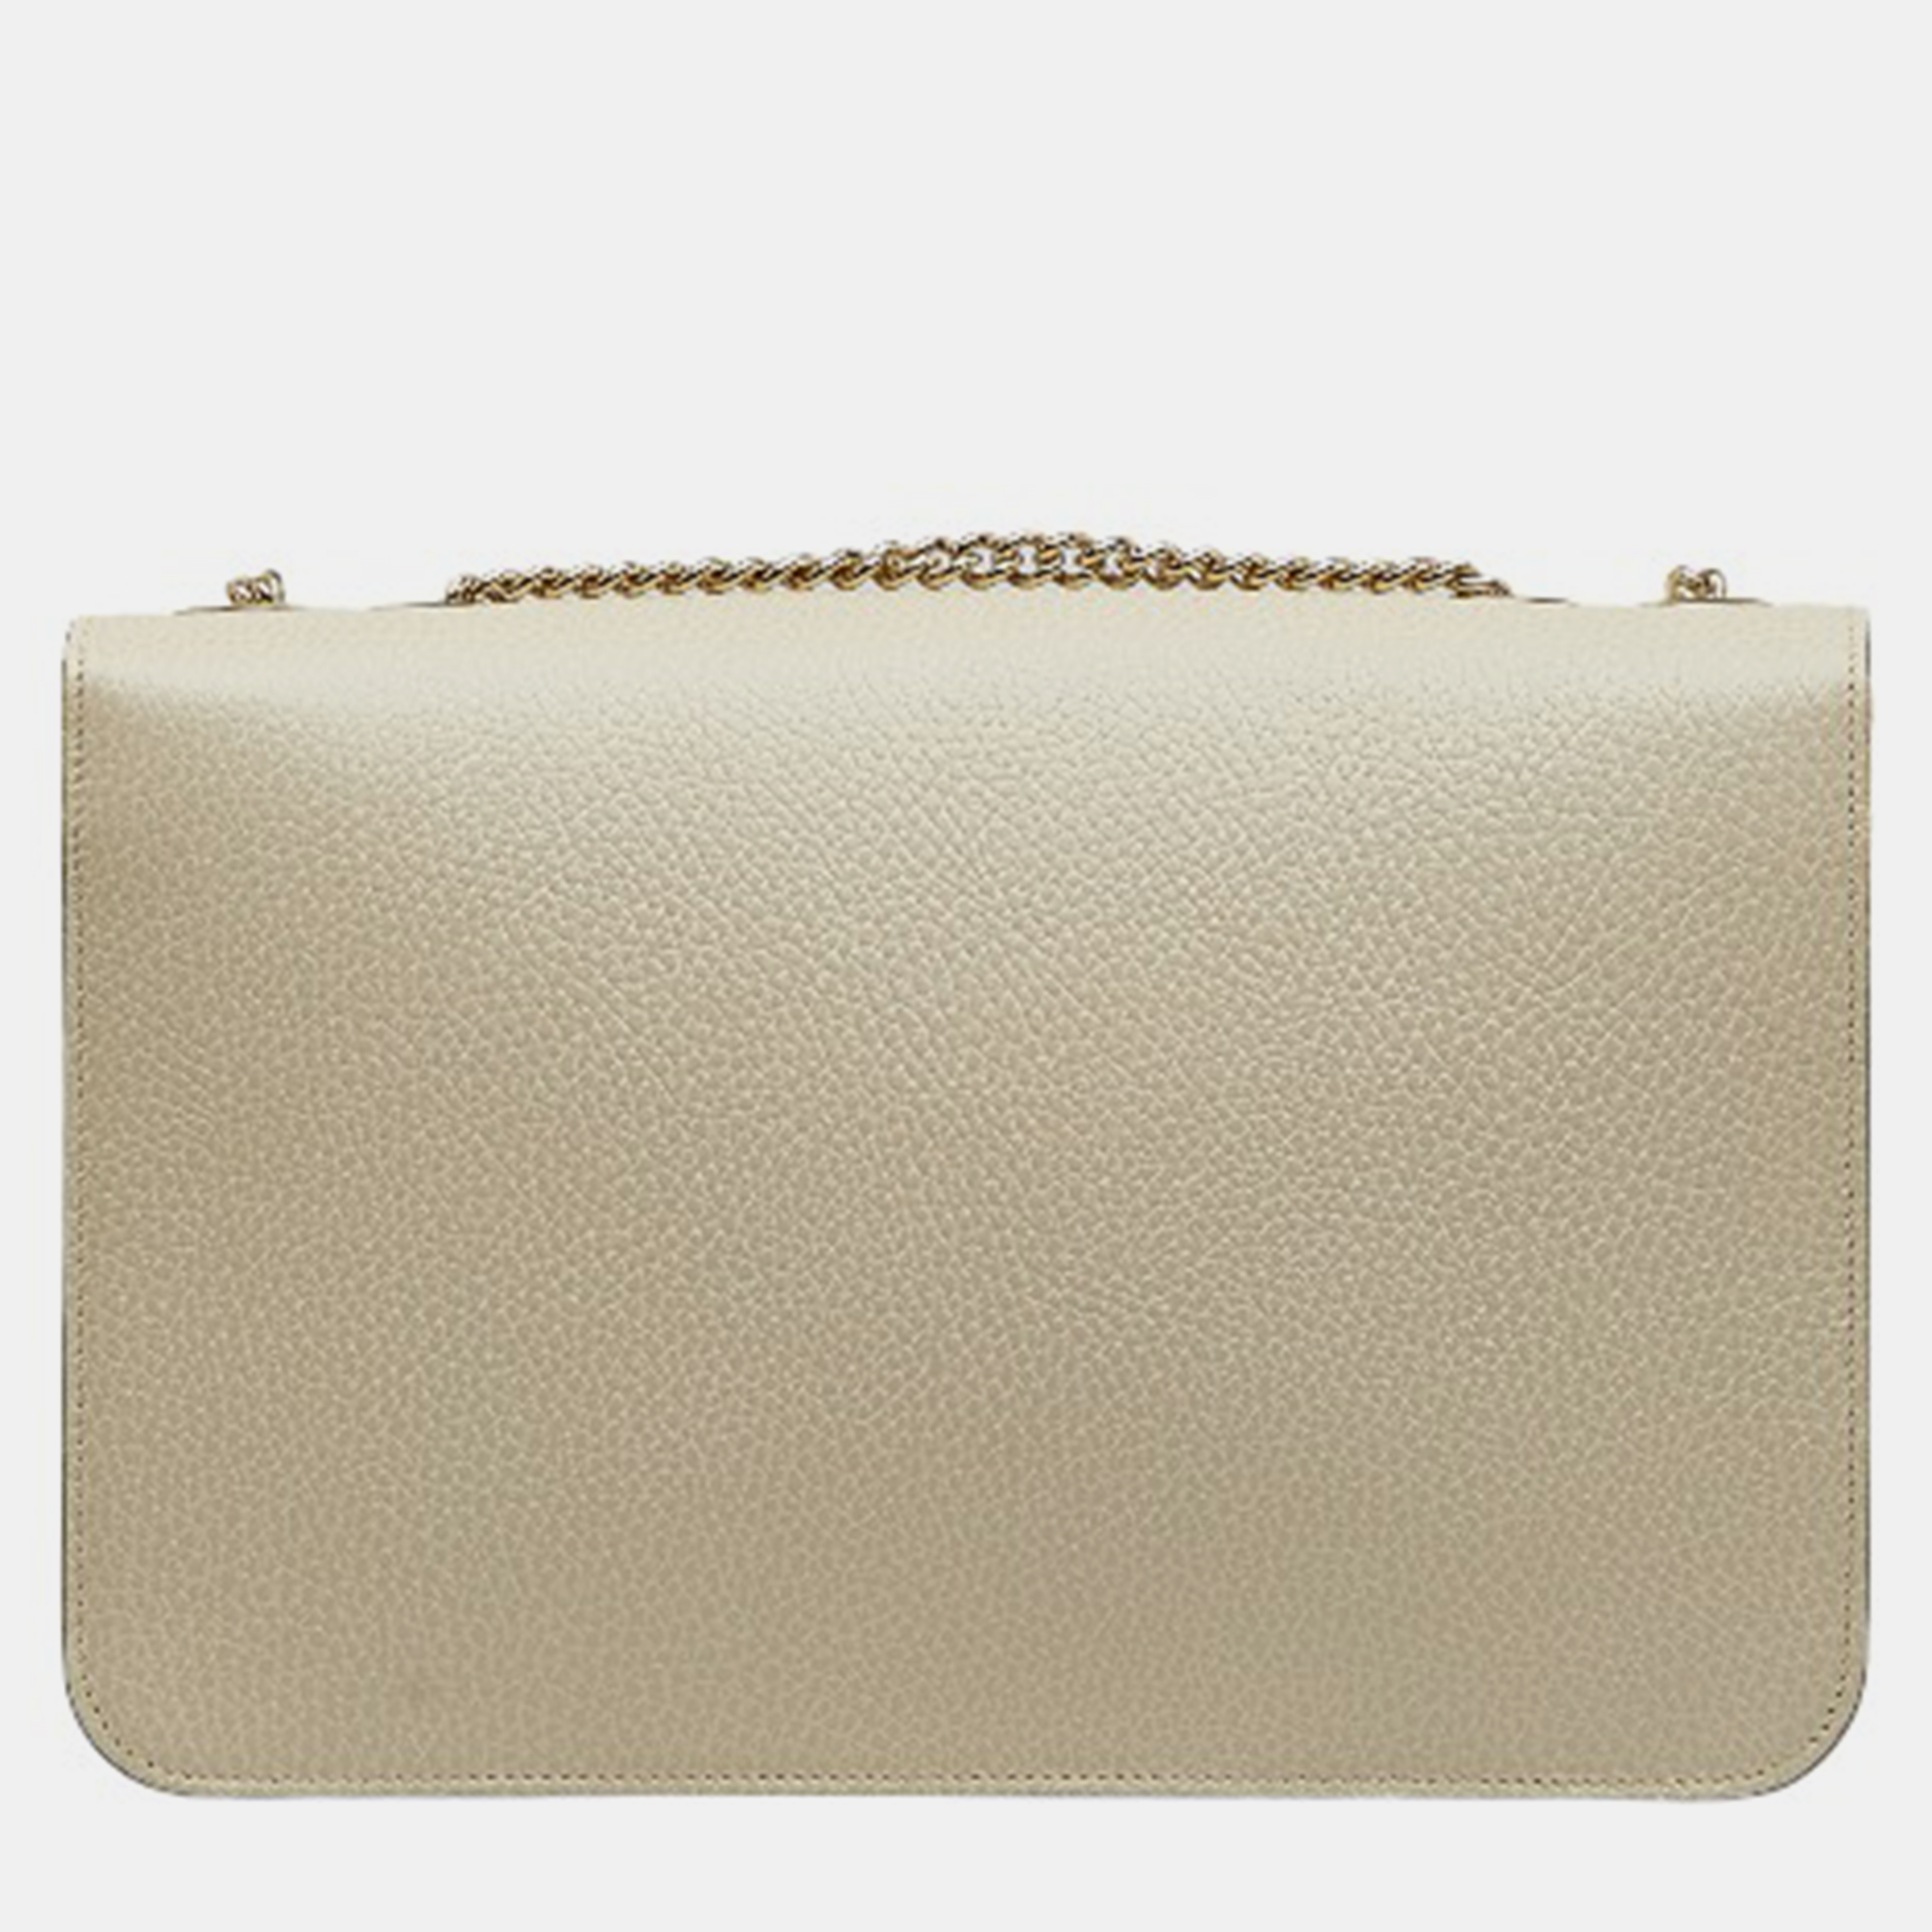 Gucci White Medium Dollar Interlocking GG Shoulder Bag